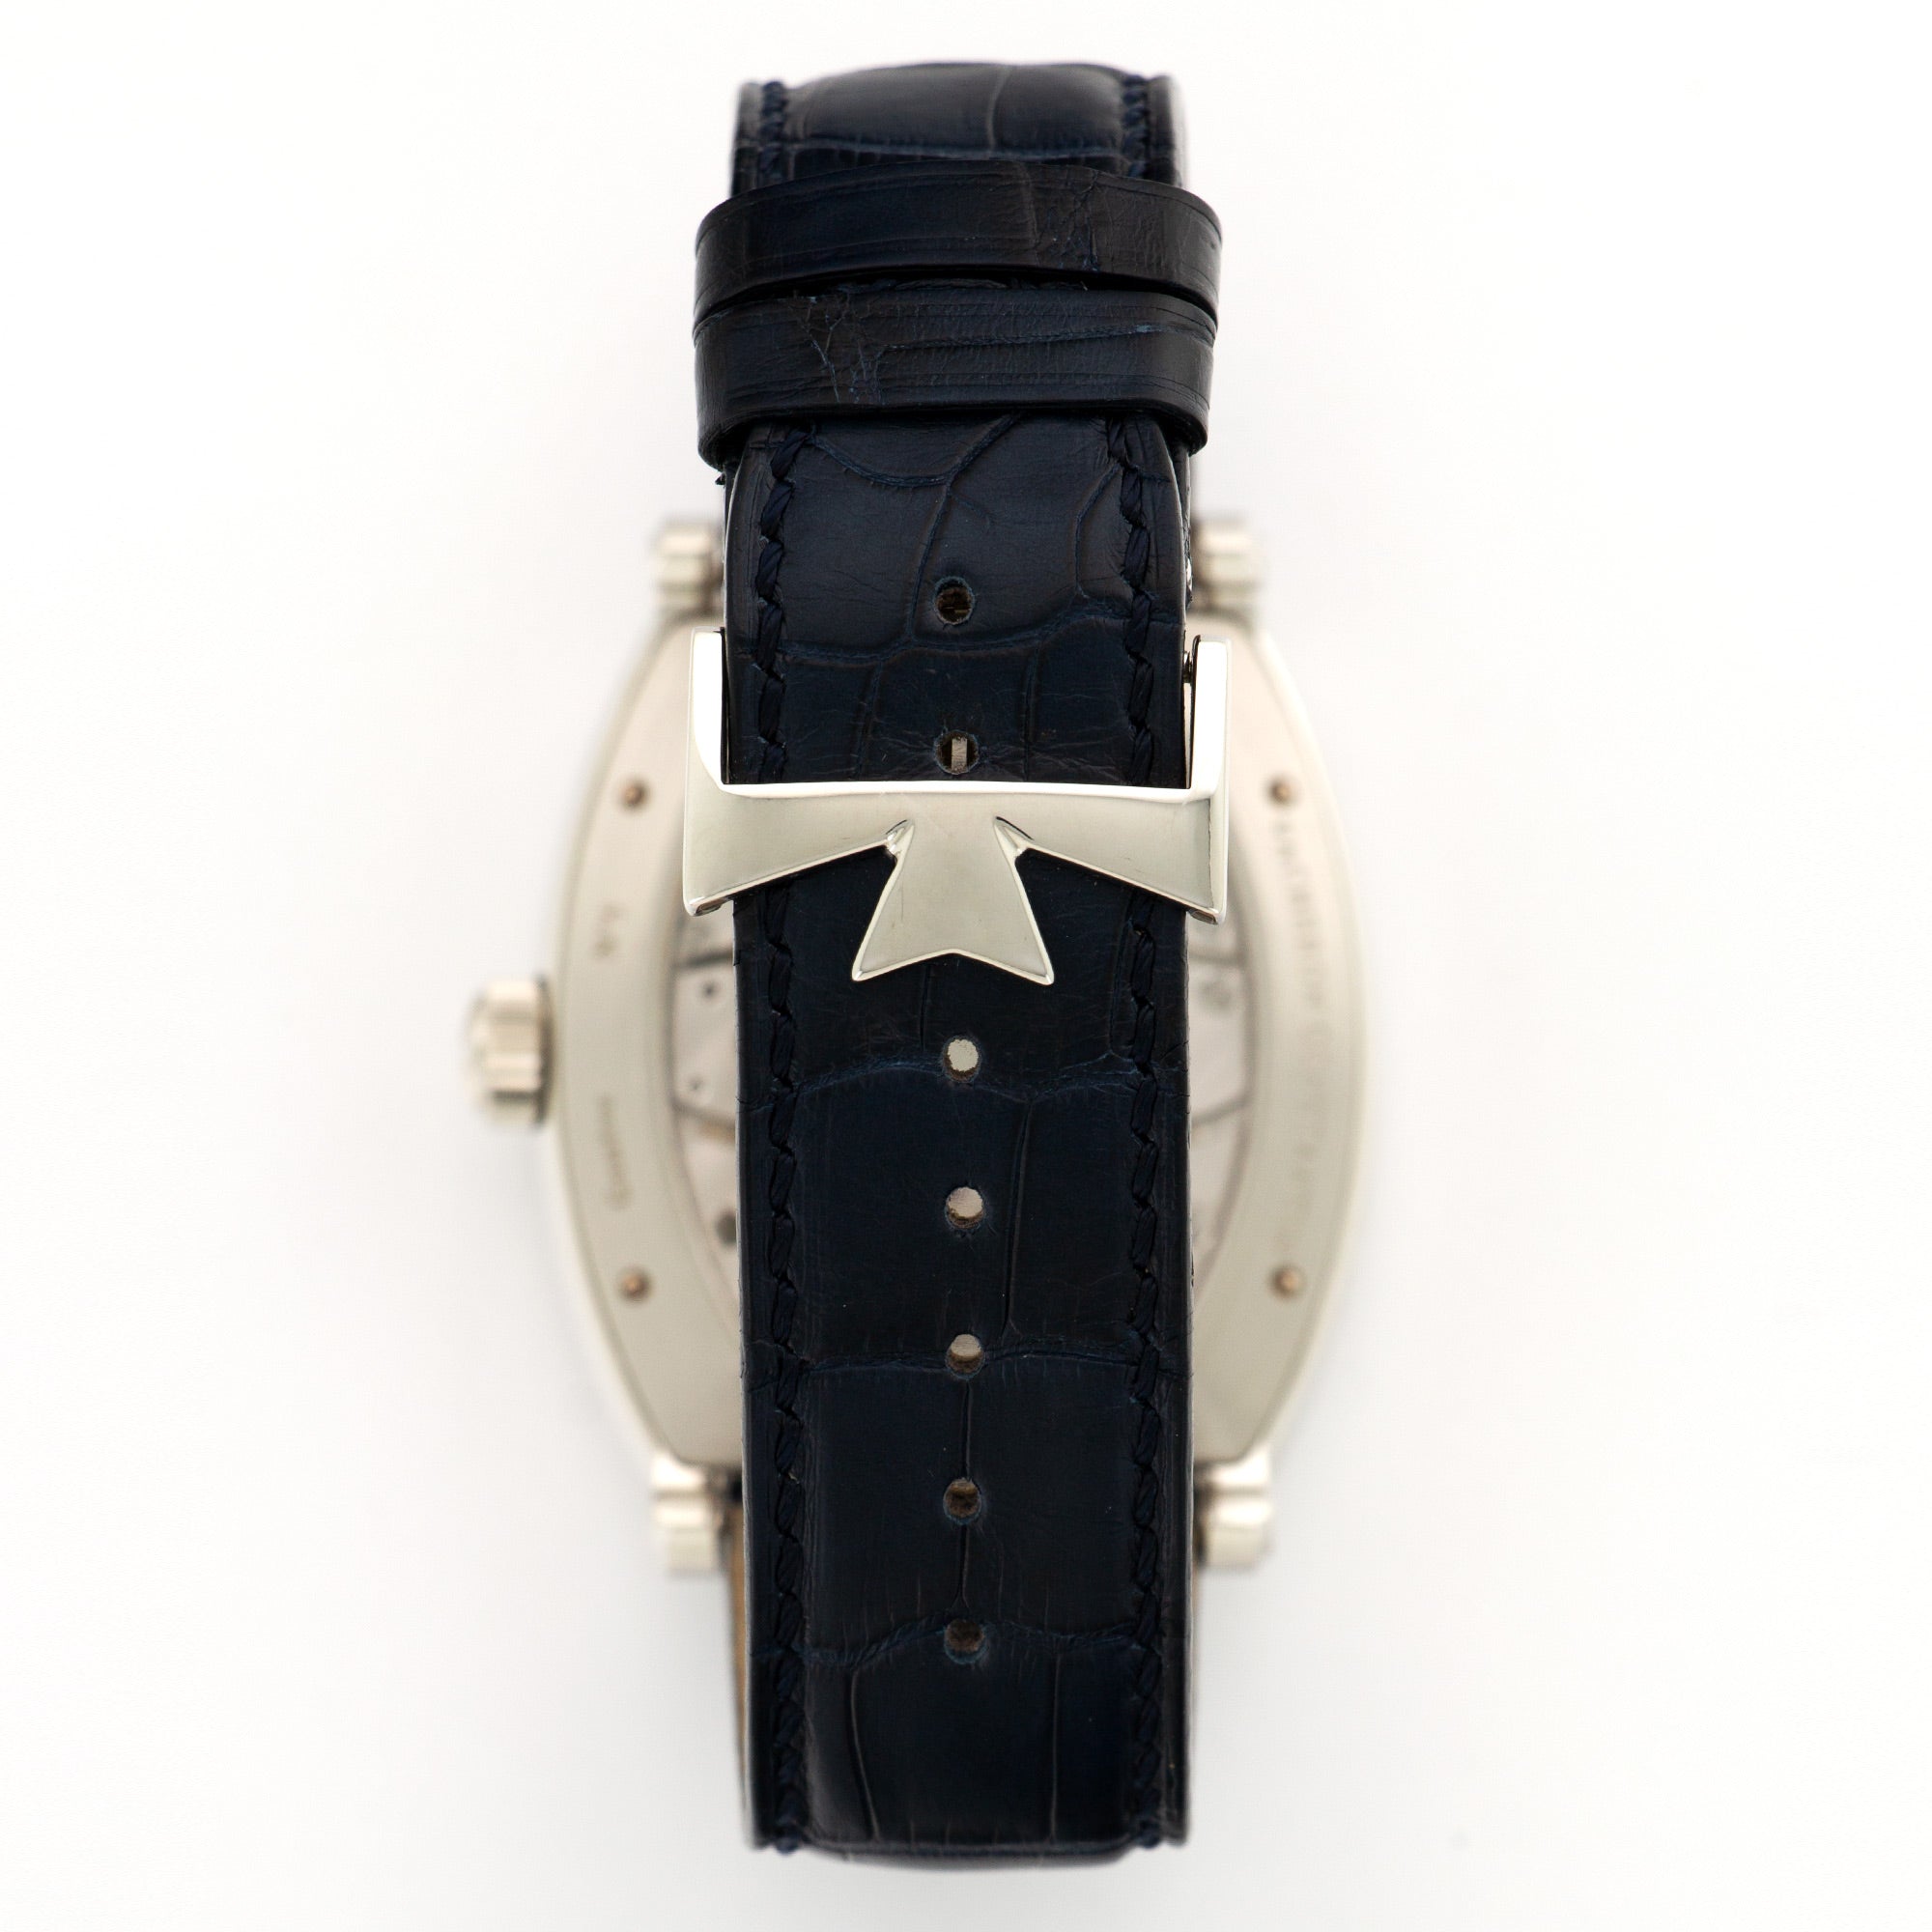 Vacheron Constantin - Vacheron Constantin Platinum Malte Tourbillon Regulator Watch Ref. 30080 - The Keystone Watches